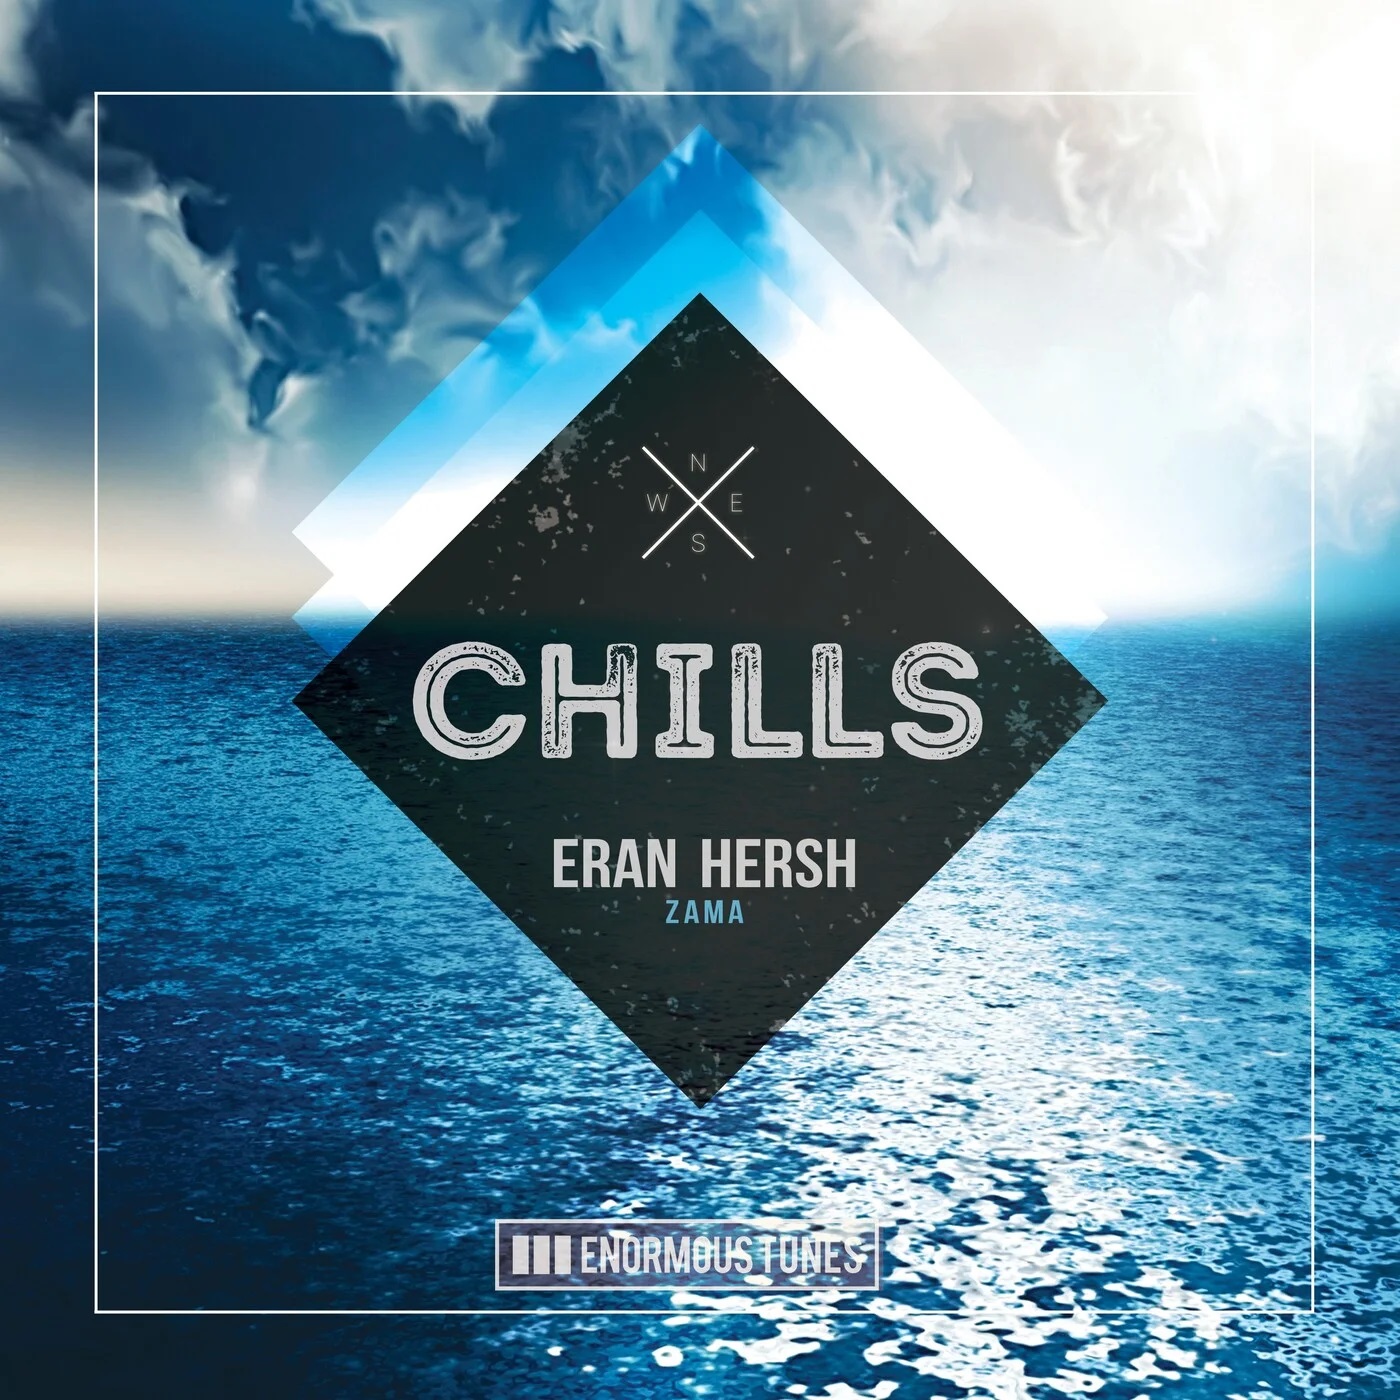 Eran Hersh - Zama (Extended Mix)